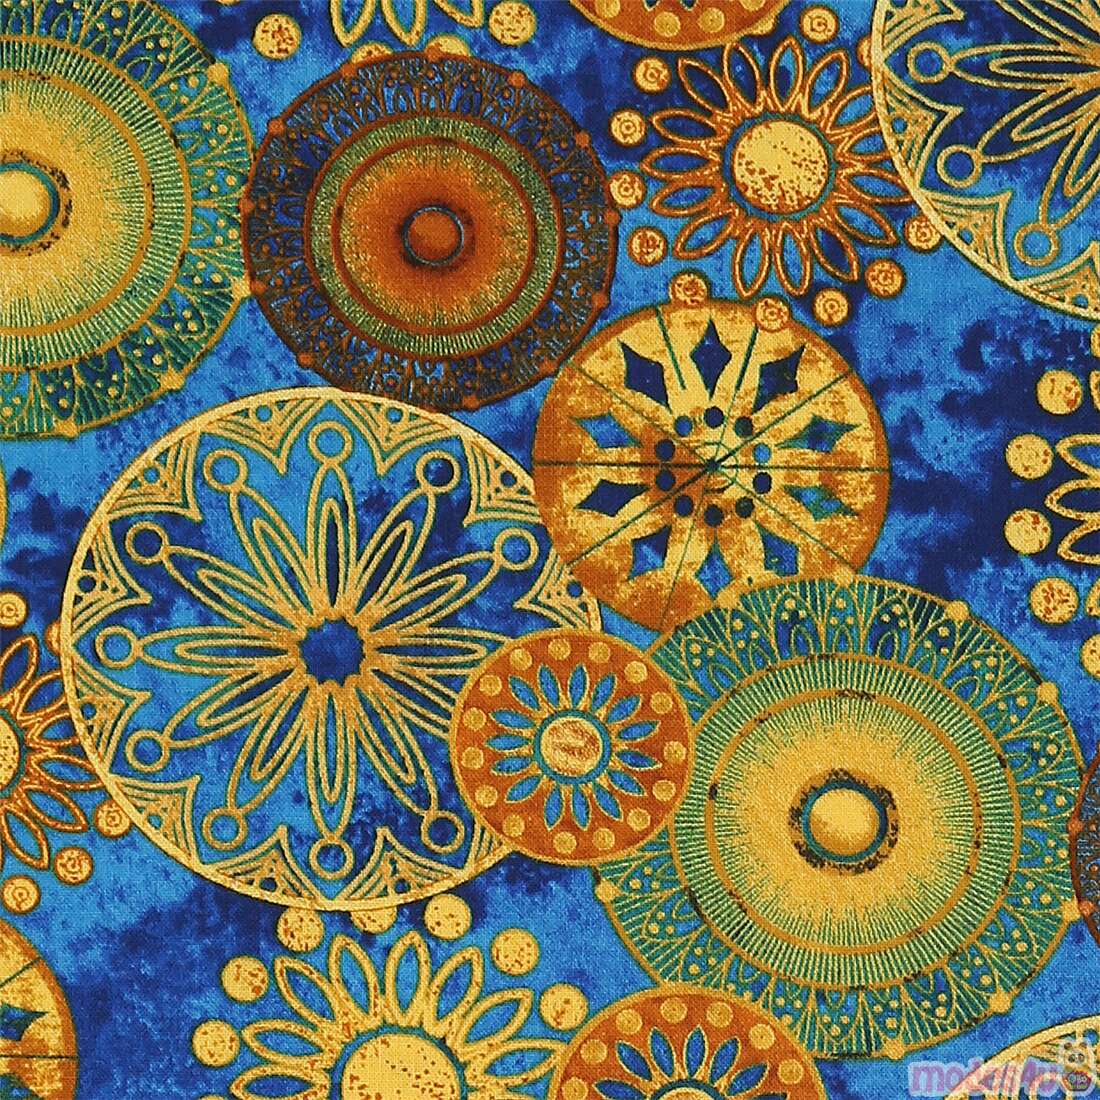 Dot Art Mandala Fabric, Wallpaper and Home Decor